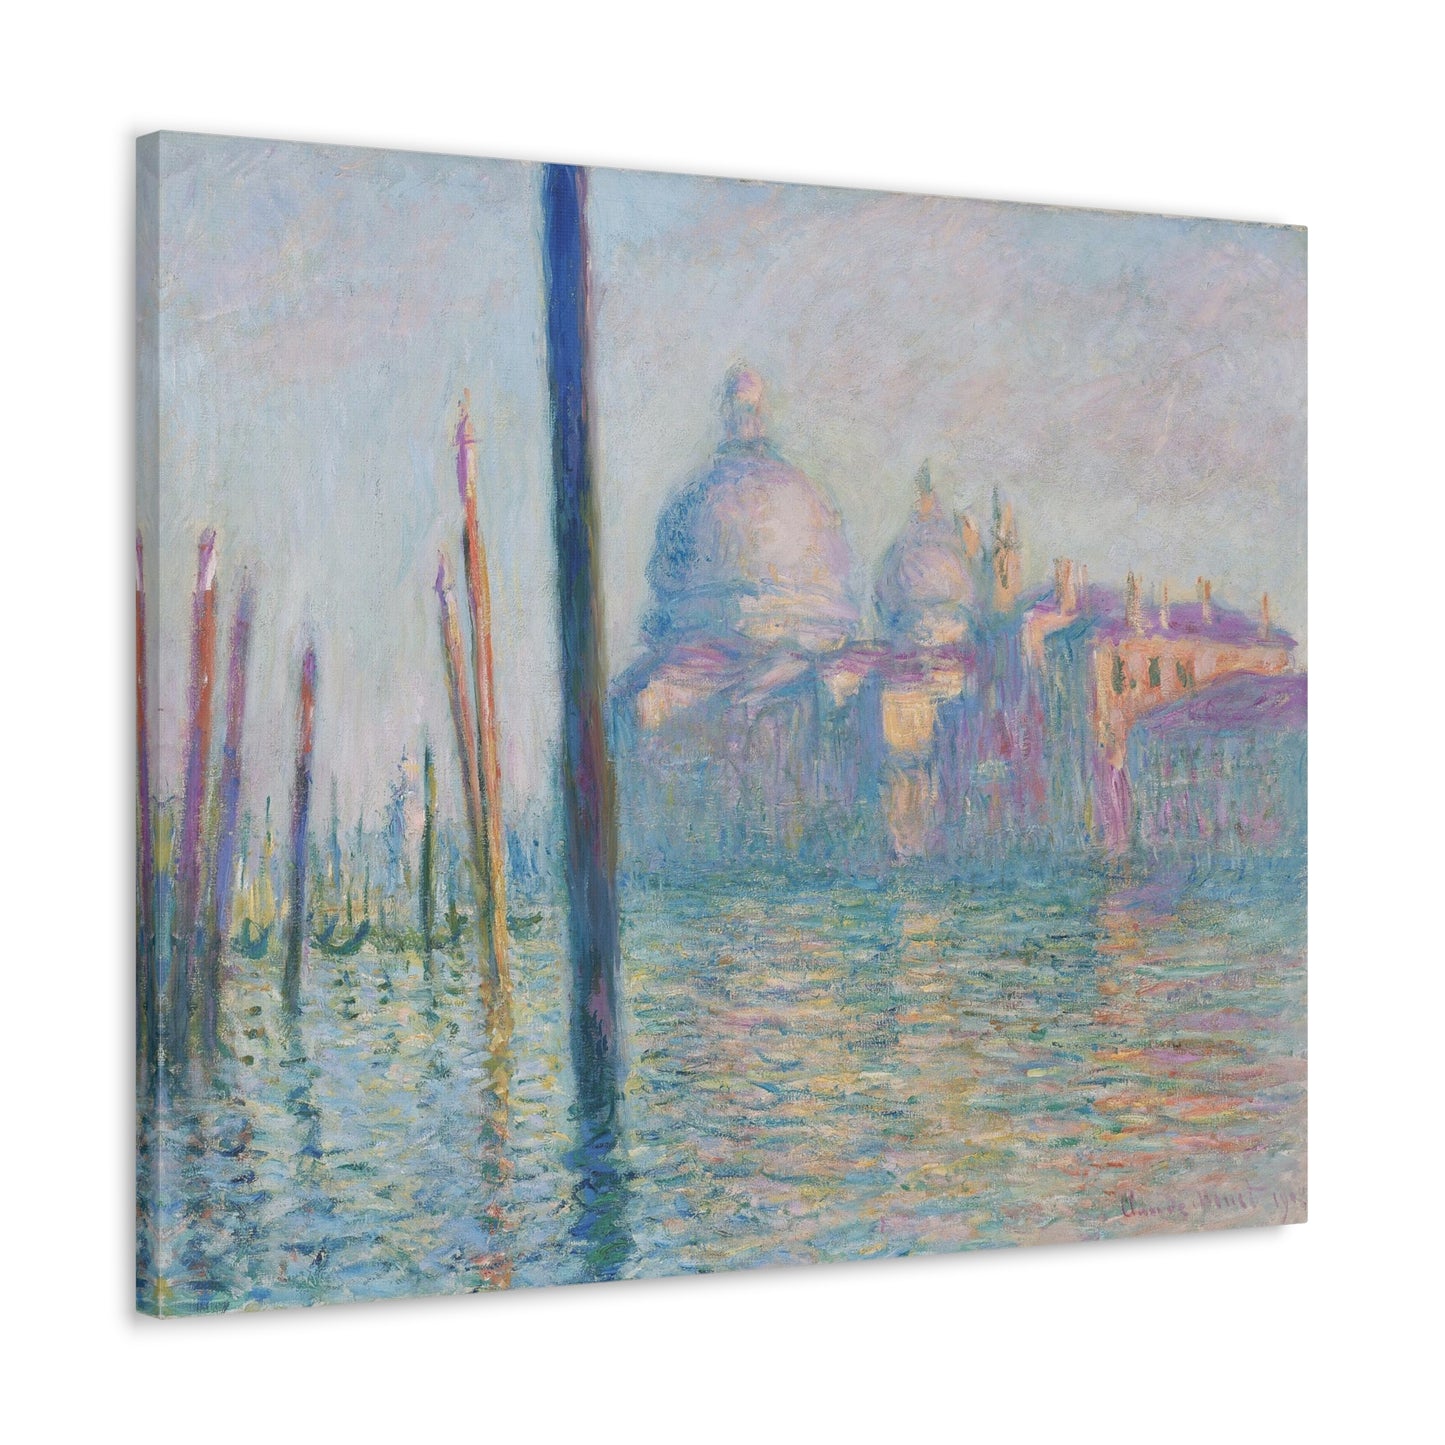 Le Grand Canal by Claude Monet - Canvas Print